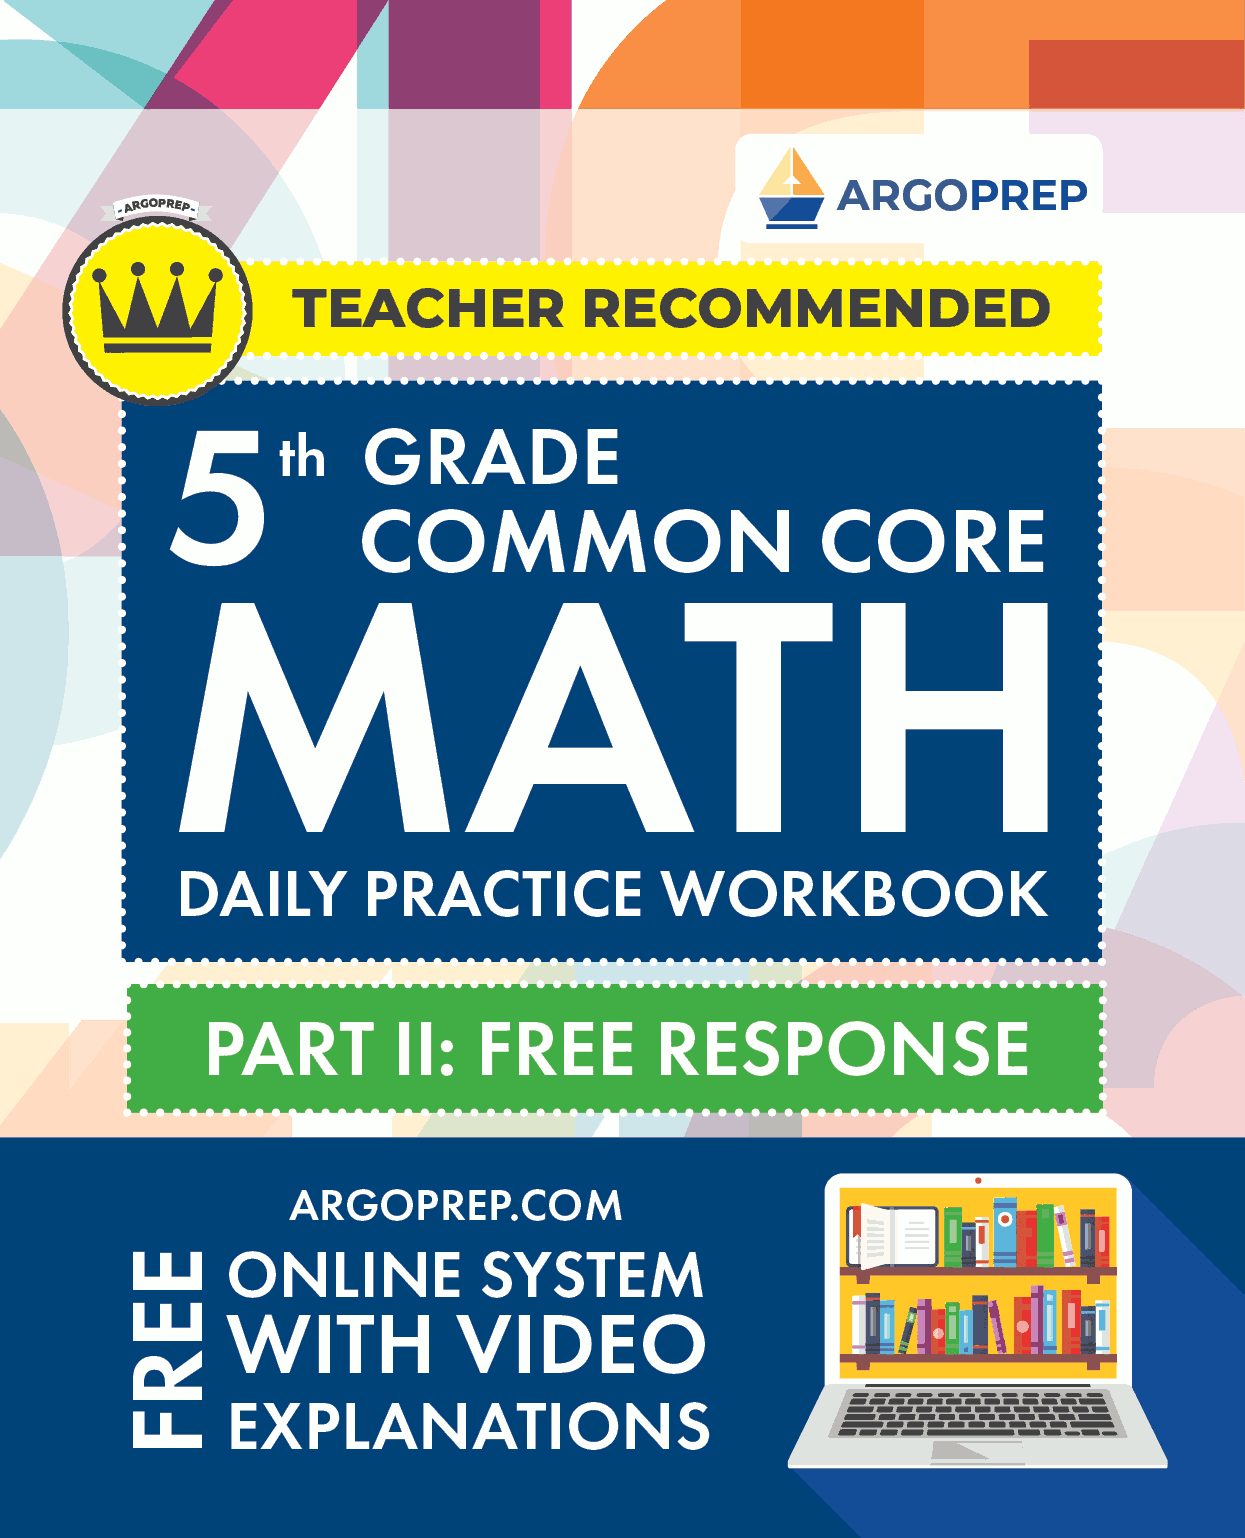 Practice　Workbook　Common　5th　Daily　Math:　Core　Grade　Part　Response　II:　Free　ArgoPrep